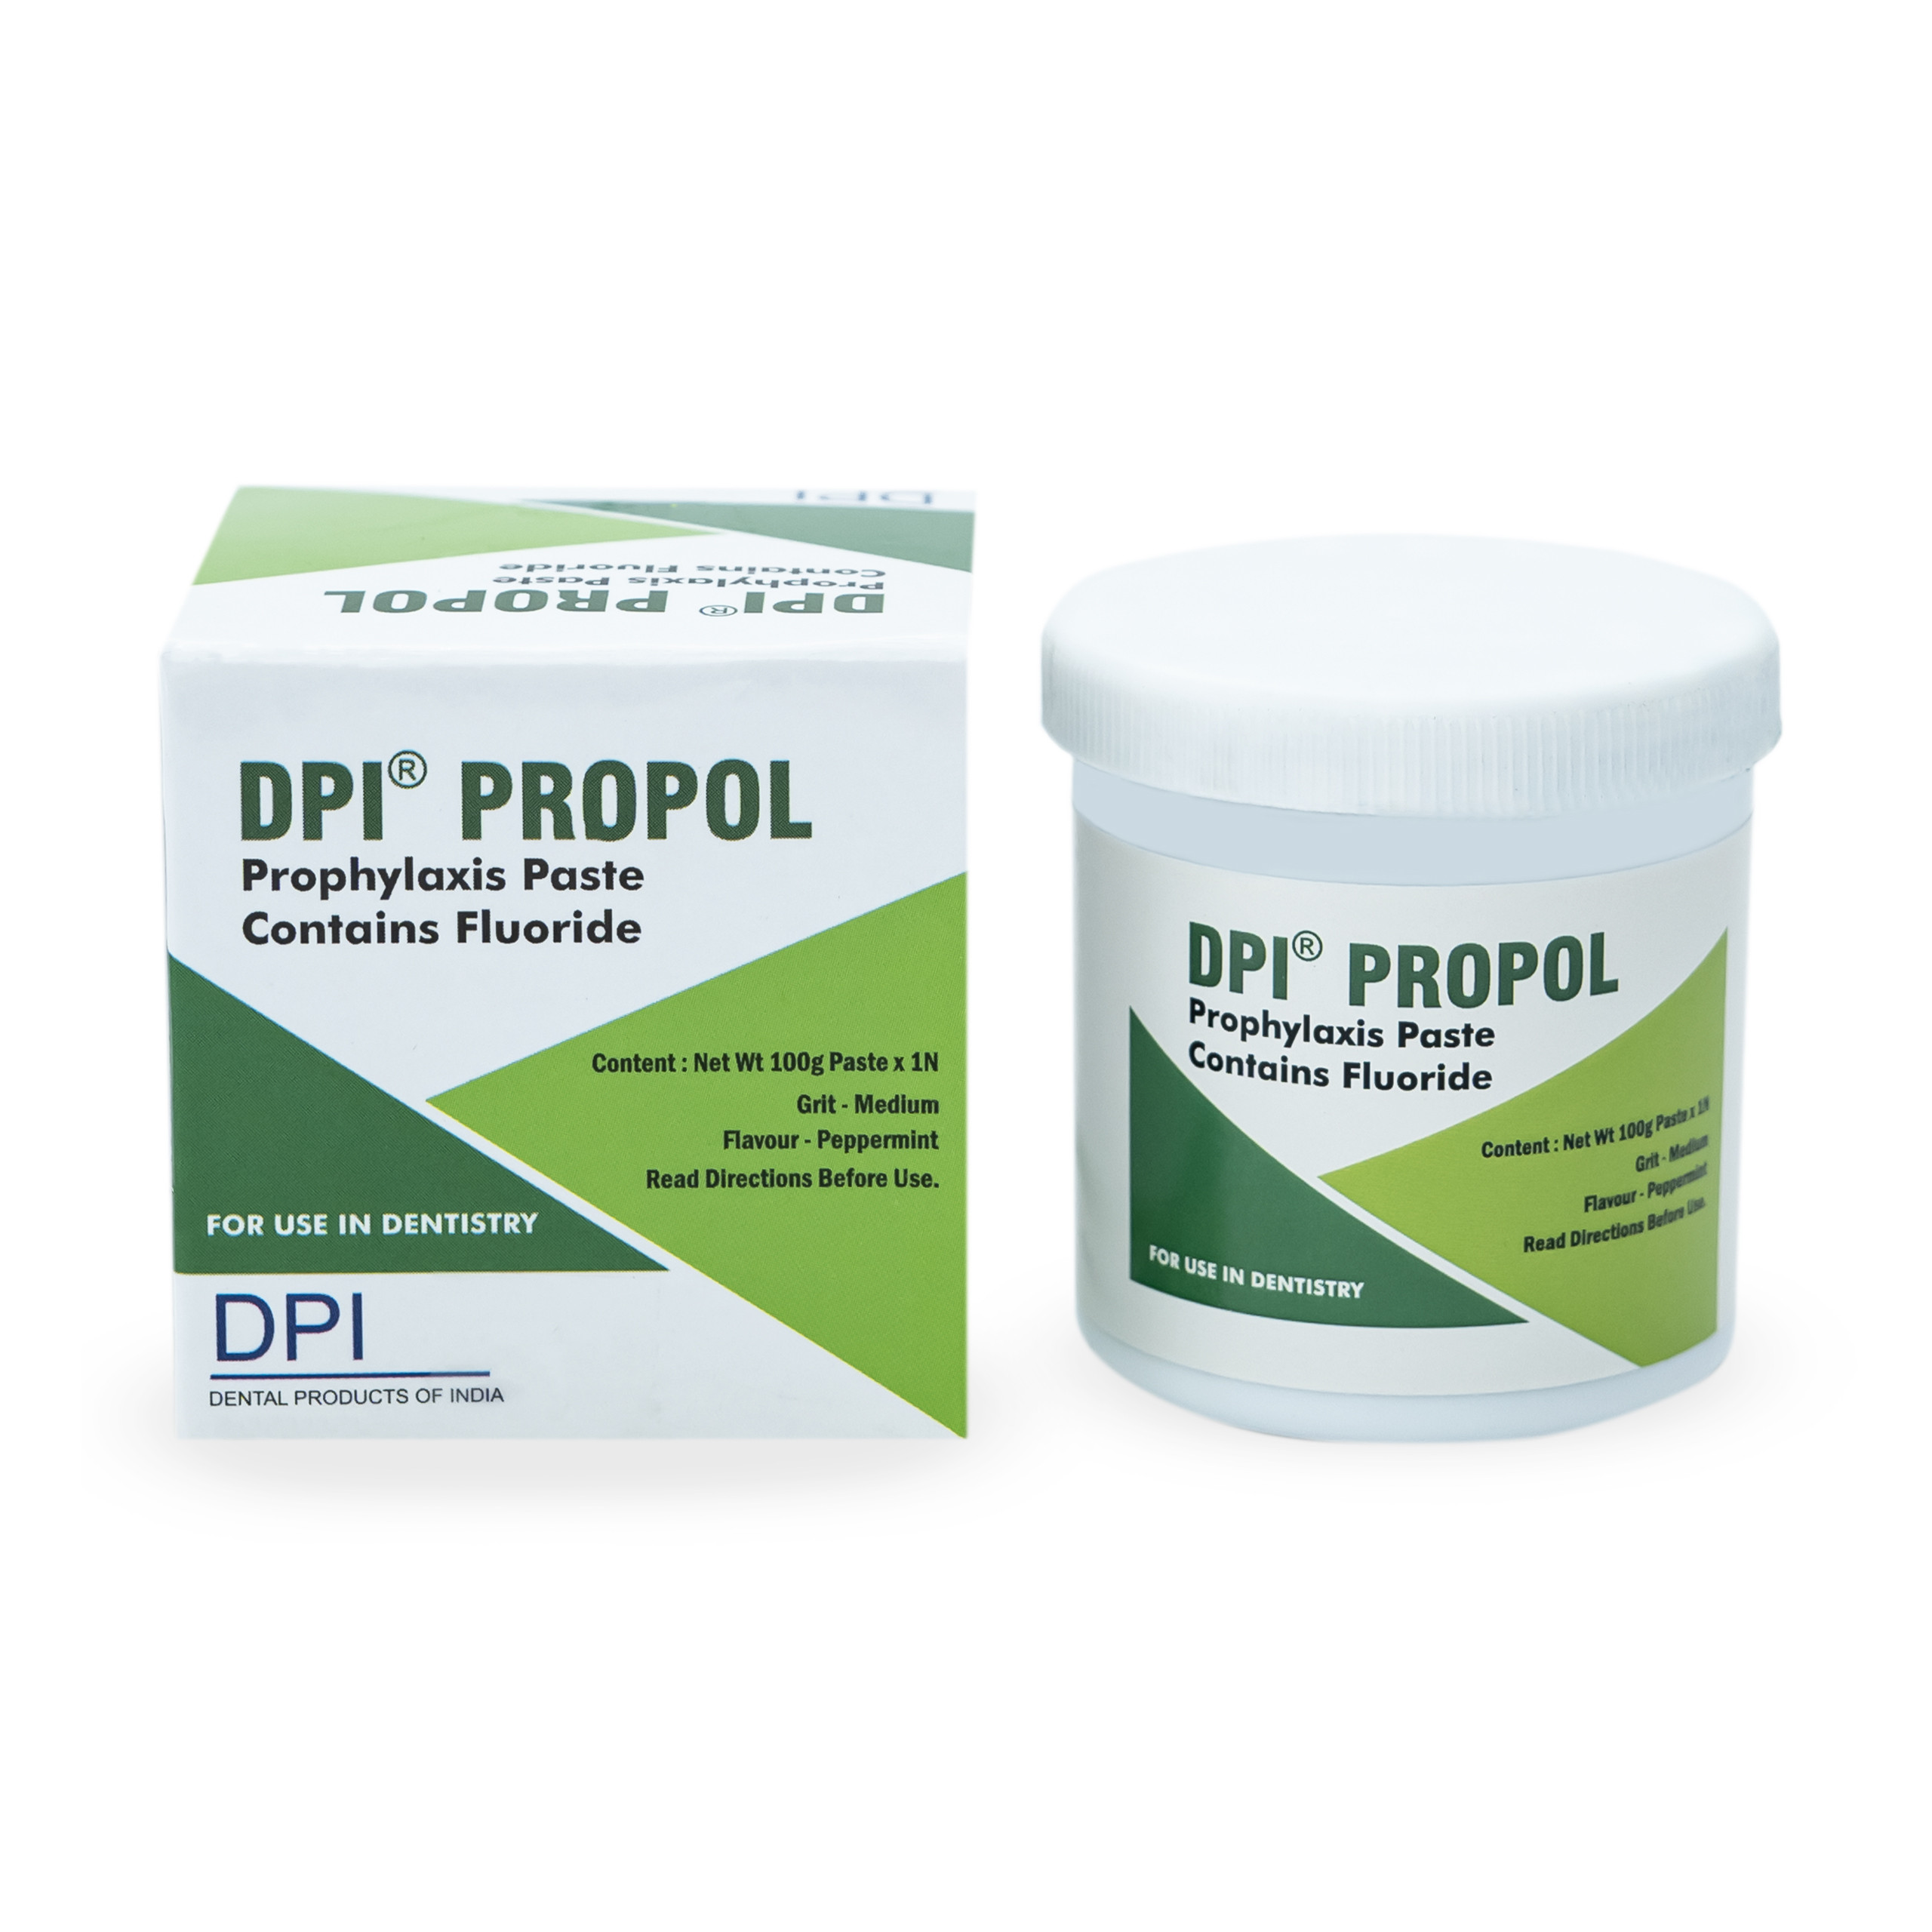 DPI Propol Prophylaxis Paste